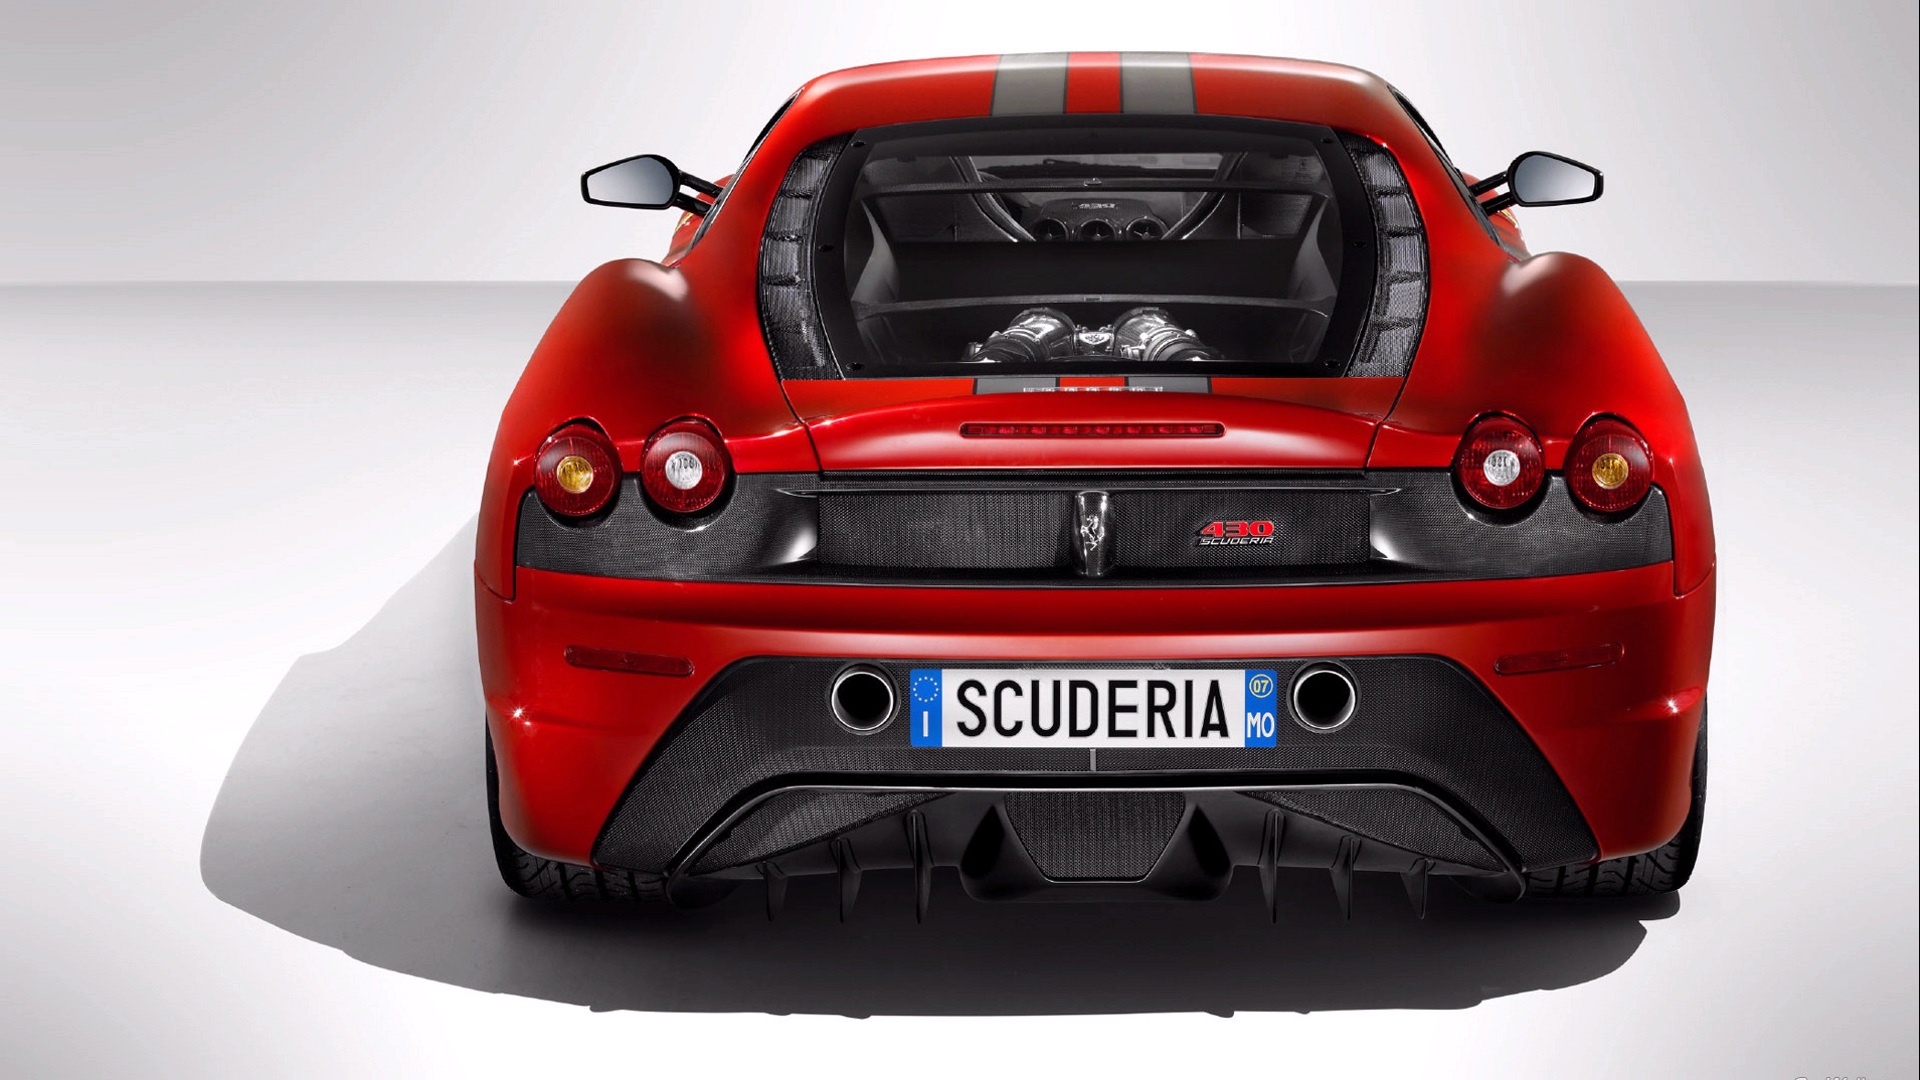 Ferrari 430 Scuderia Wallpapers